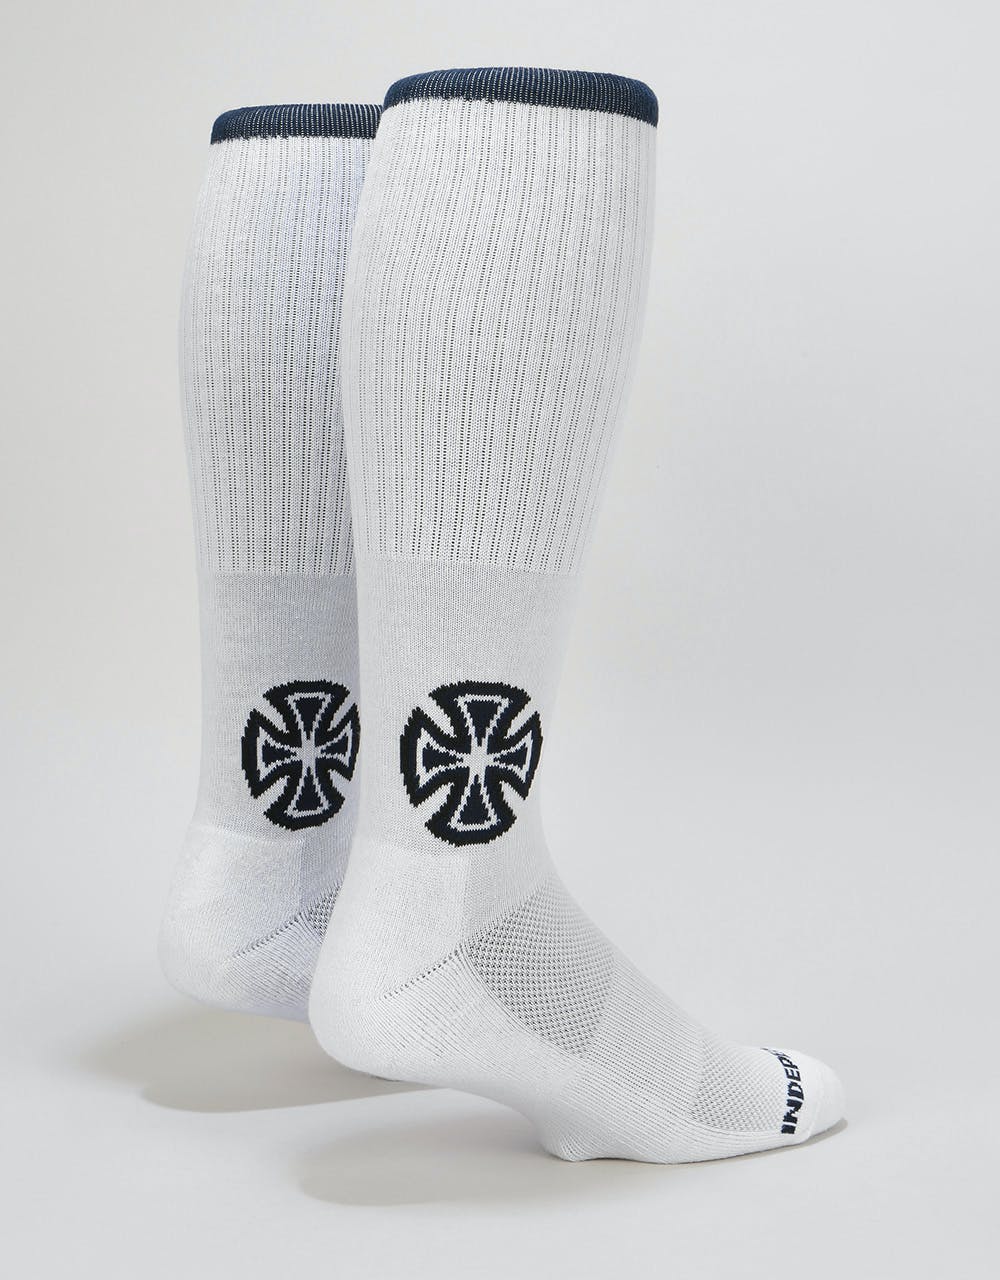 Independent Big Cross Primary Socks - White